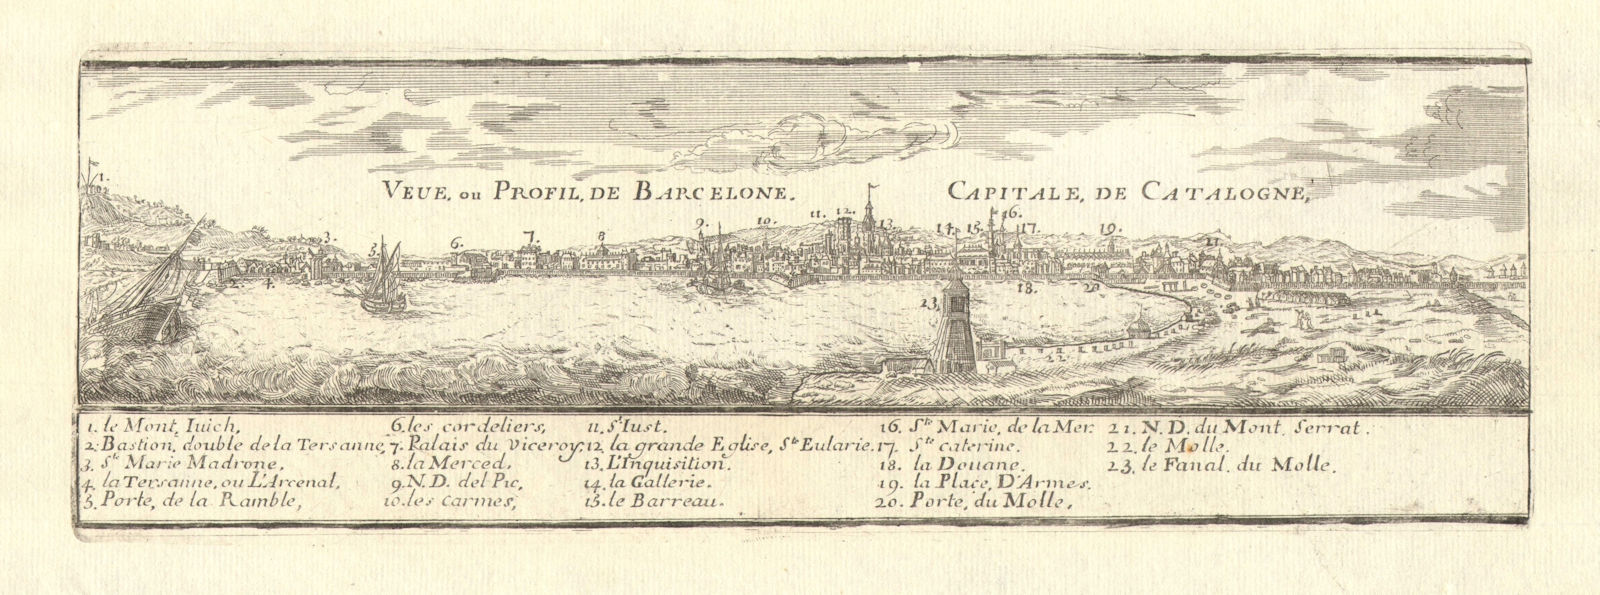 'Veue…de Barcelone. Capitale de Catalogne'. Barcelona, Catalonia. DE FER 1705